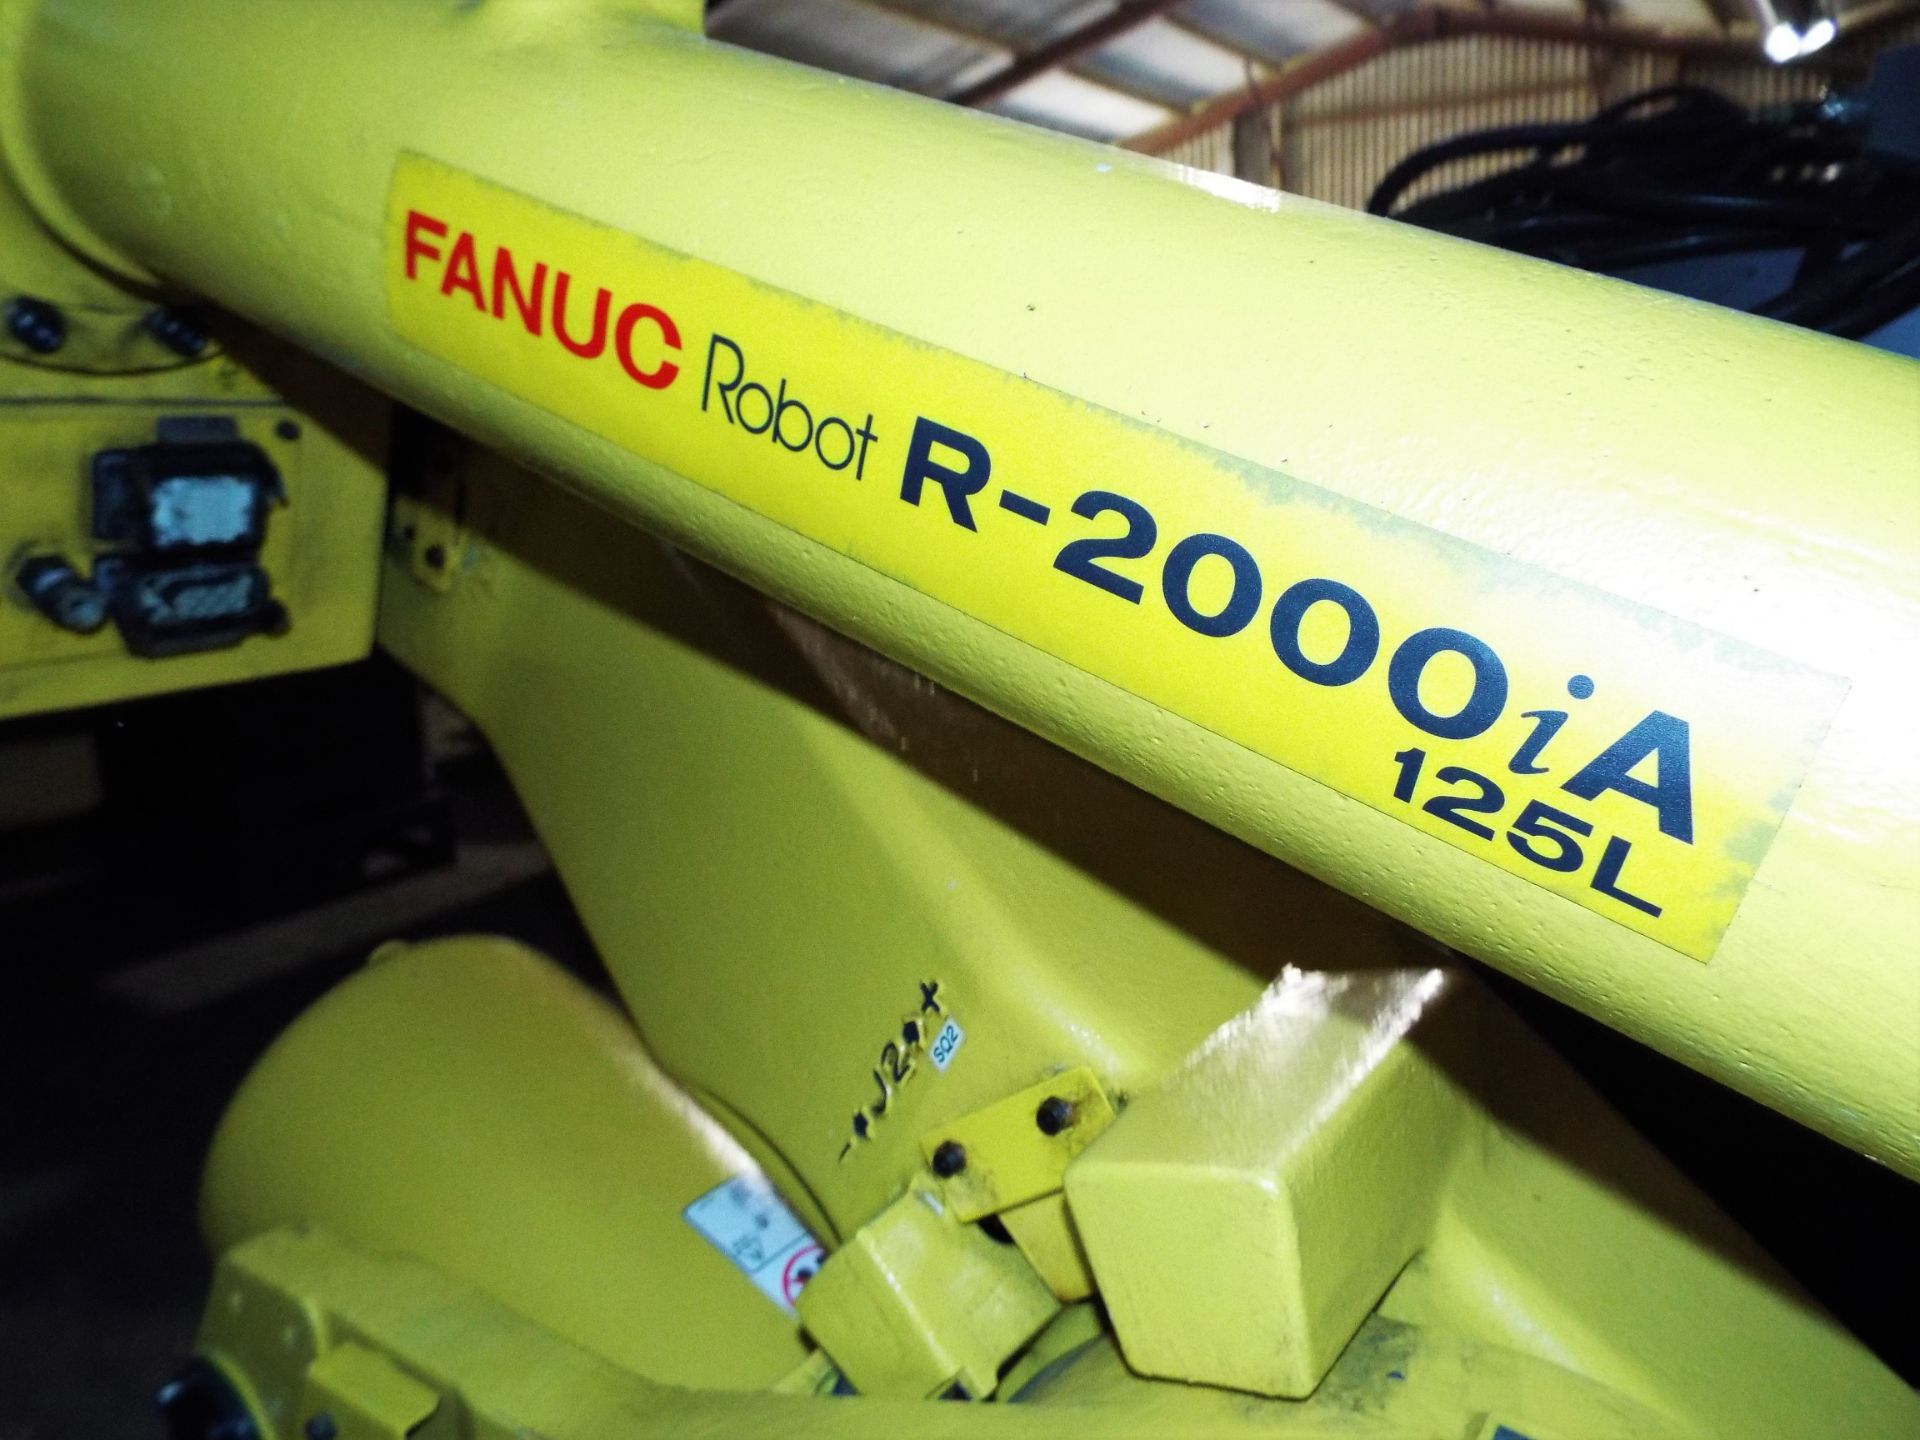 Fanuc Robot Type R-2000 - iA - 125L - RJ3iB Control - Image 3 of 8